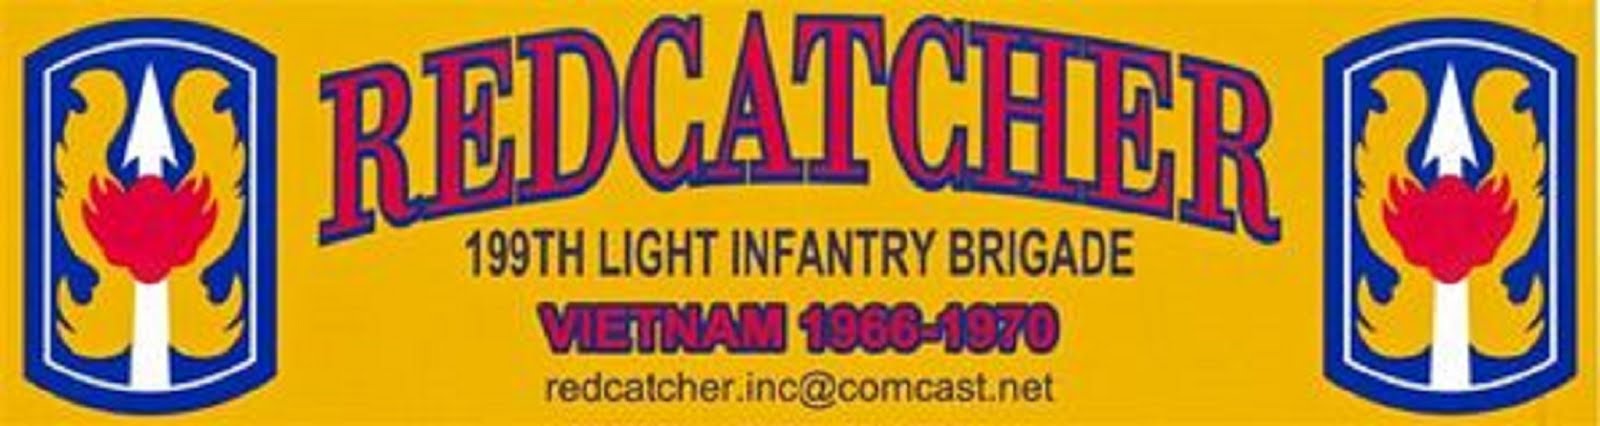 REDCATCHER 199th LIGHT INFANTRY BRIGADE